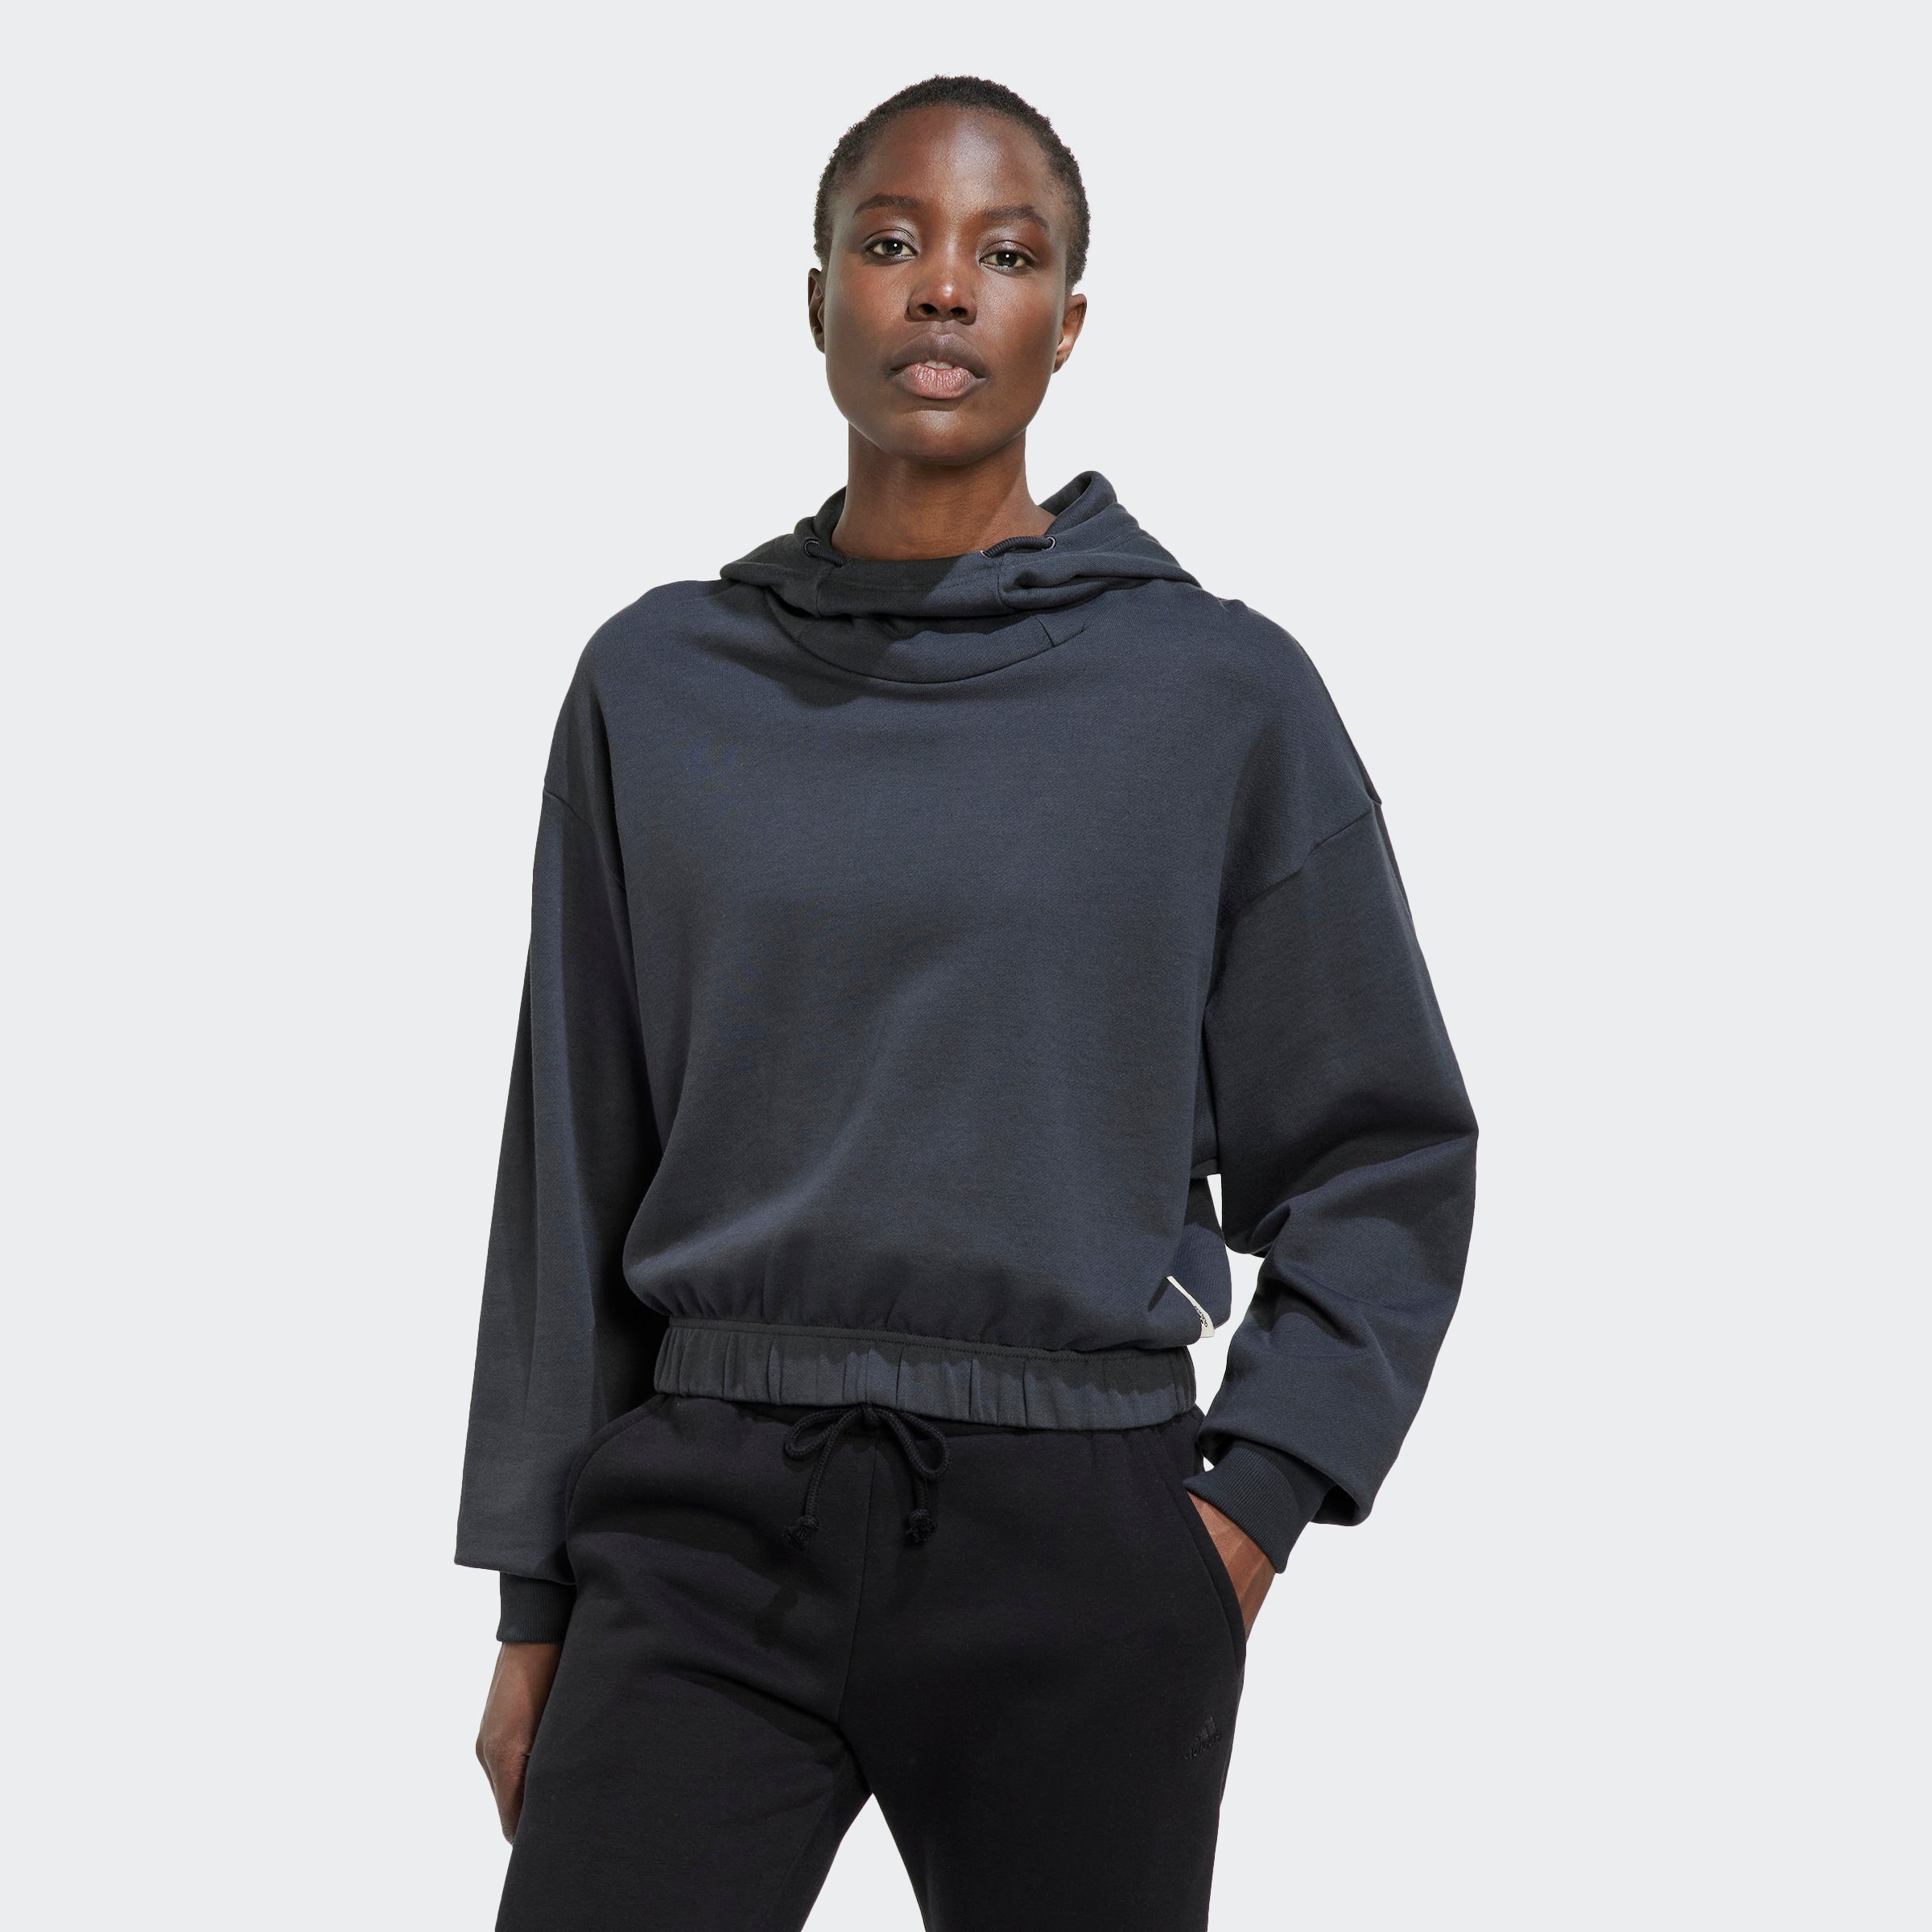 HOODIE CROPPED STUDIO Sportswear CARBON Sweatshirt LOUNGE adidas